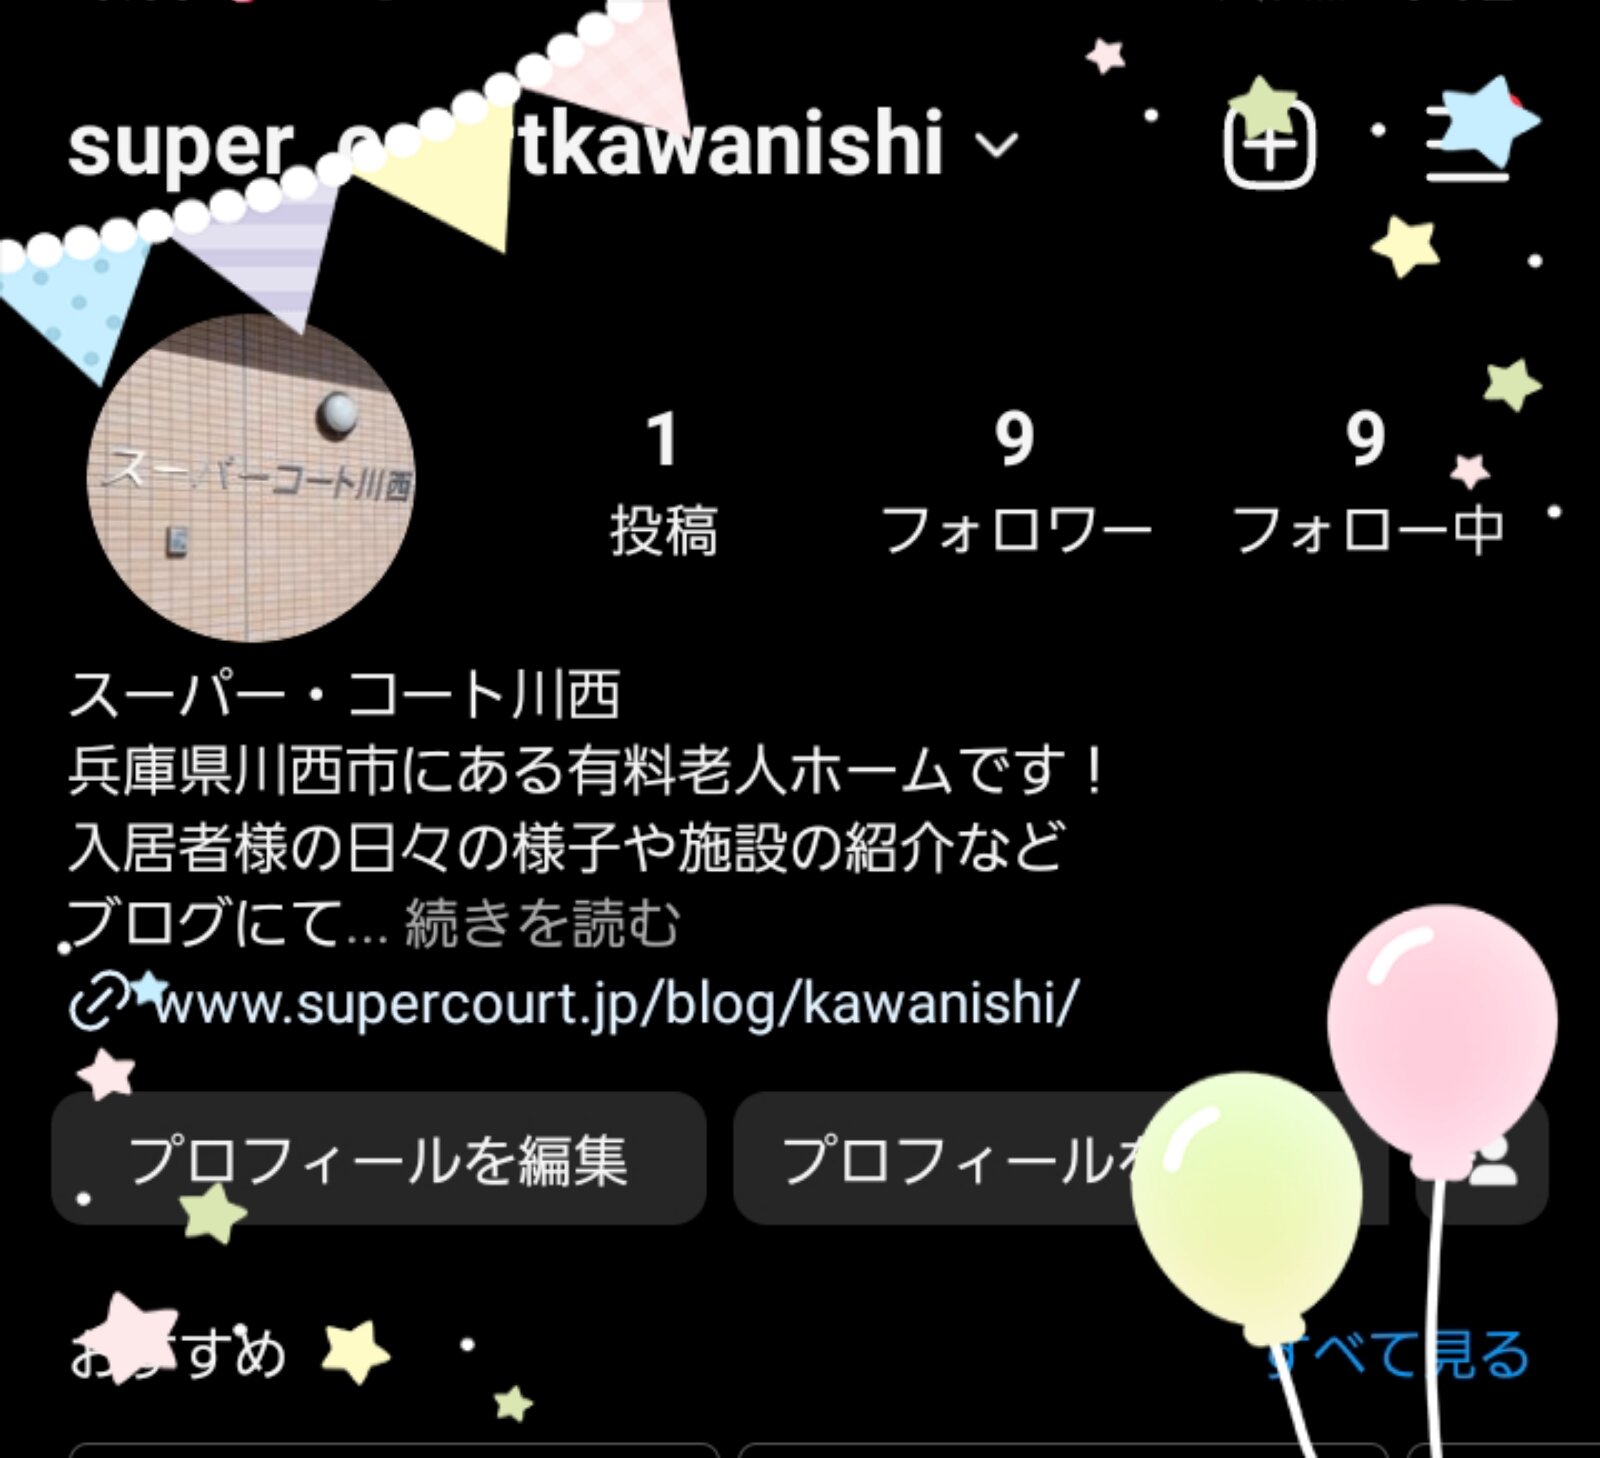 https://www.supercourt.jp/blog/kawanishi/23-11-25-02-55-08-259_deco%5B1%5D.jpg